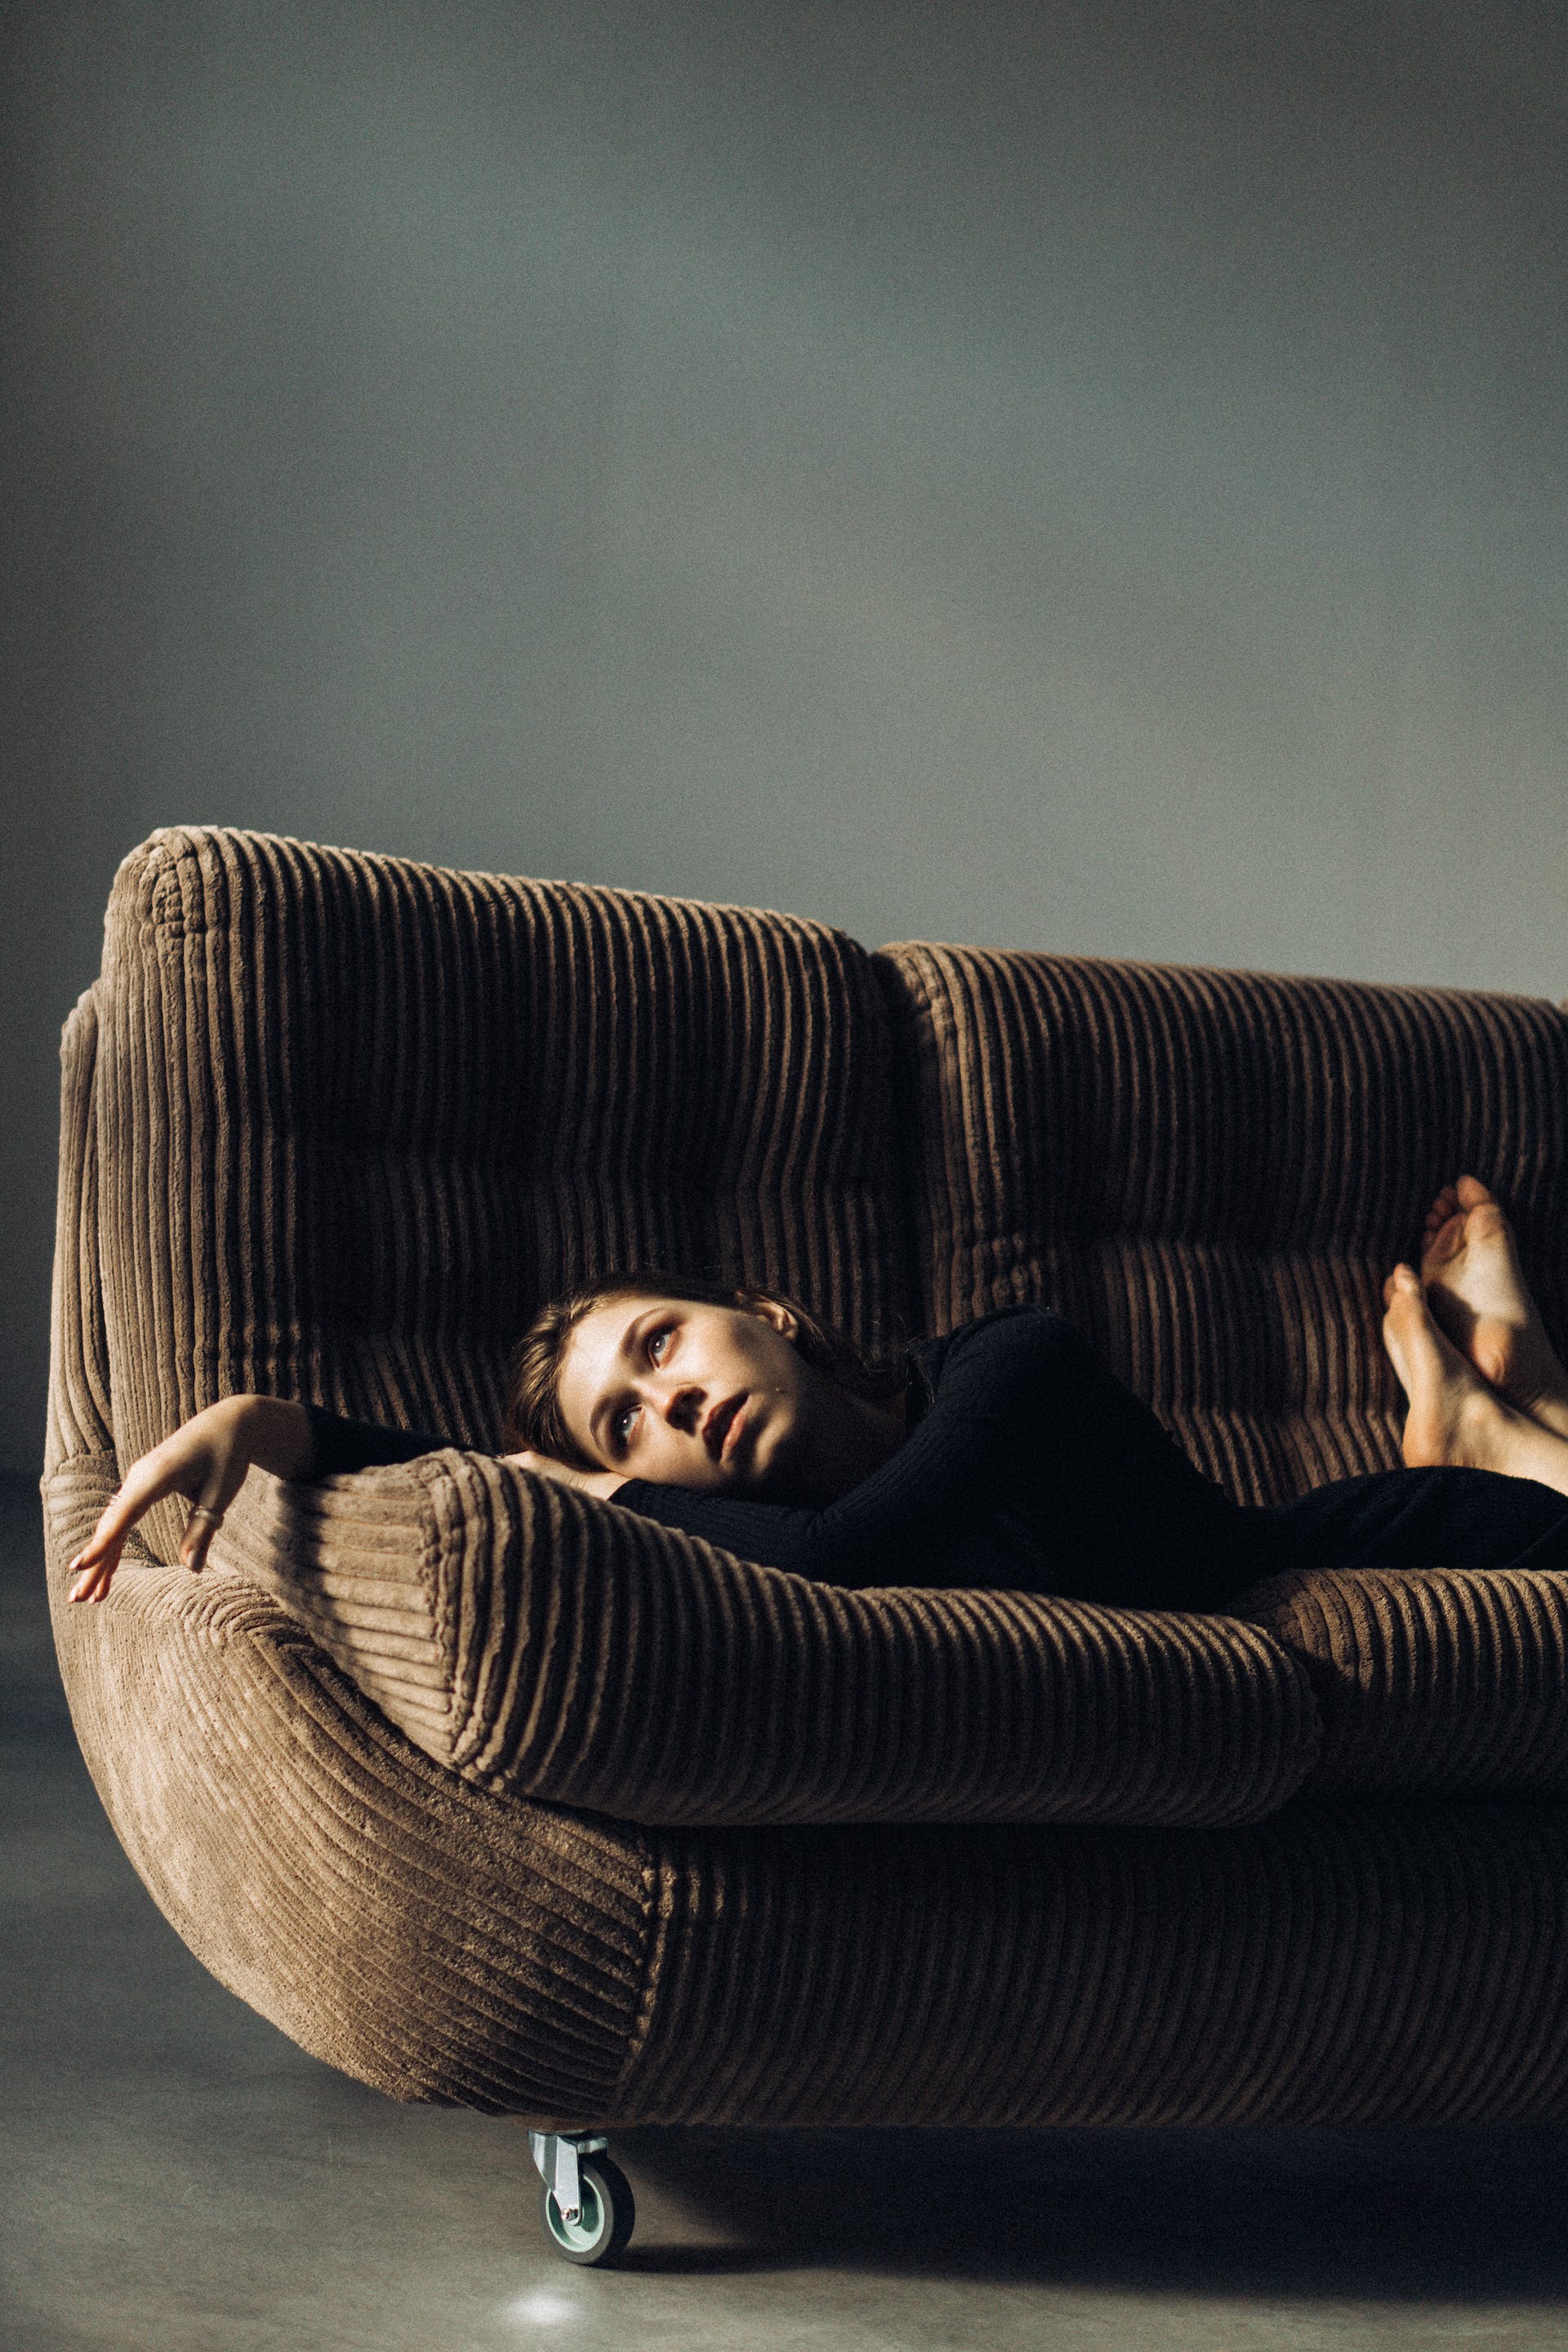 A sad woman lying on a sofa | Source: Pexels